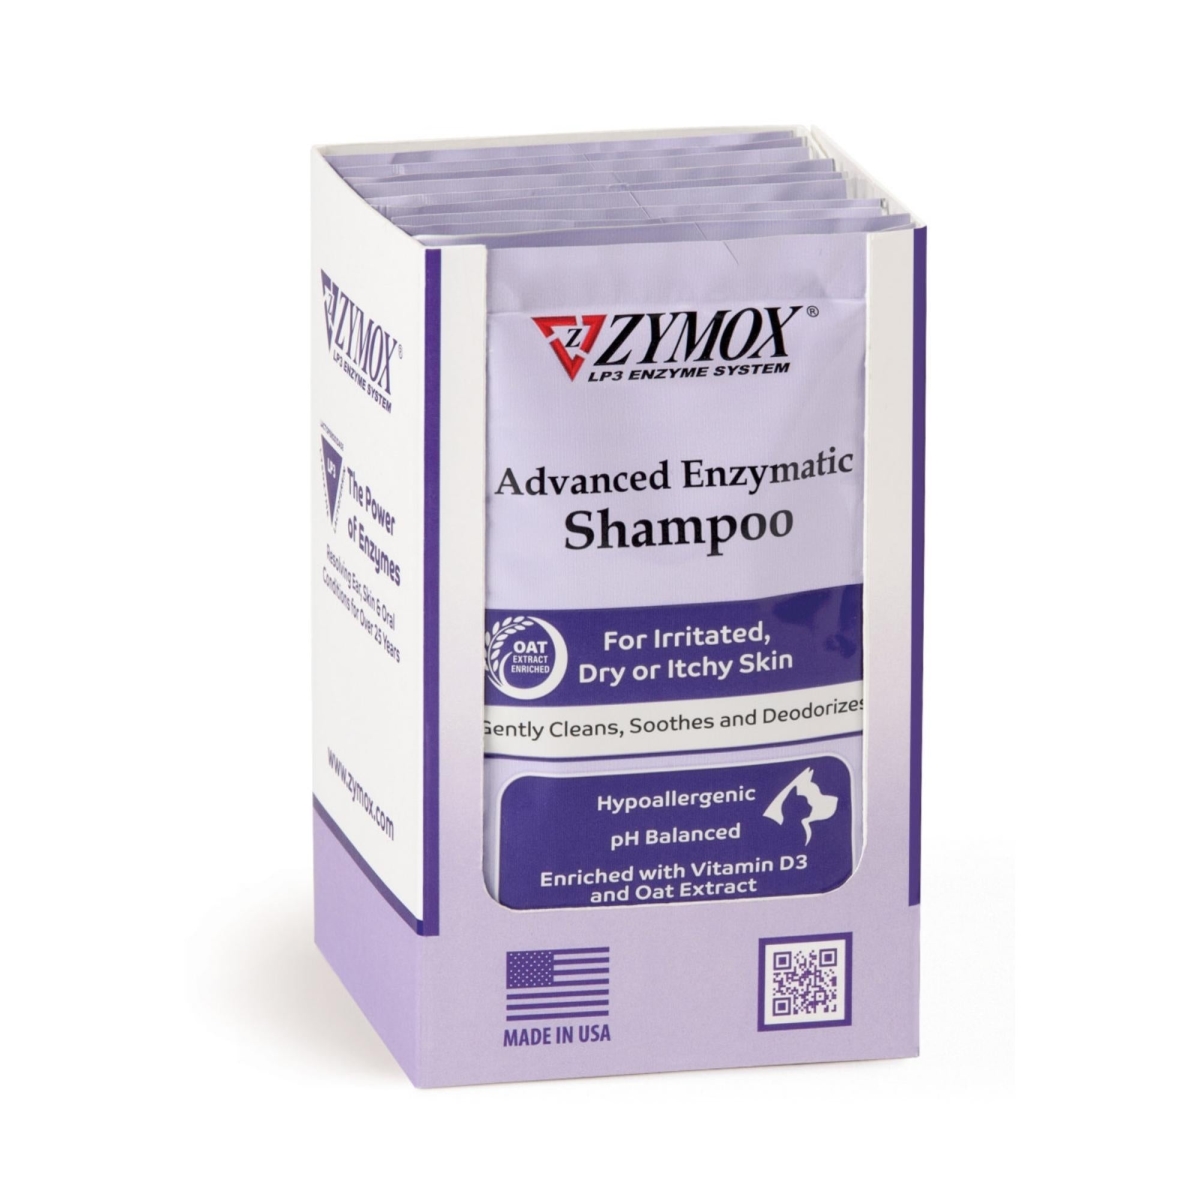 Picture of Zymox 667334900354 0.75 oz Advanced Enzymatic Shampoo Foil Pack POP - 10 Count